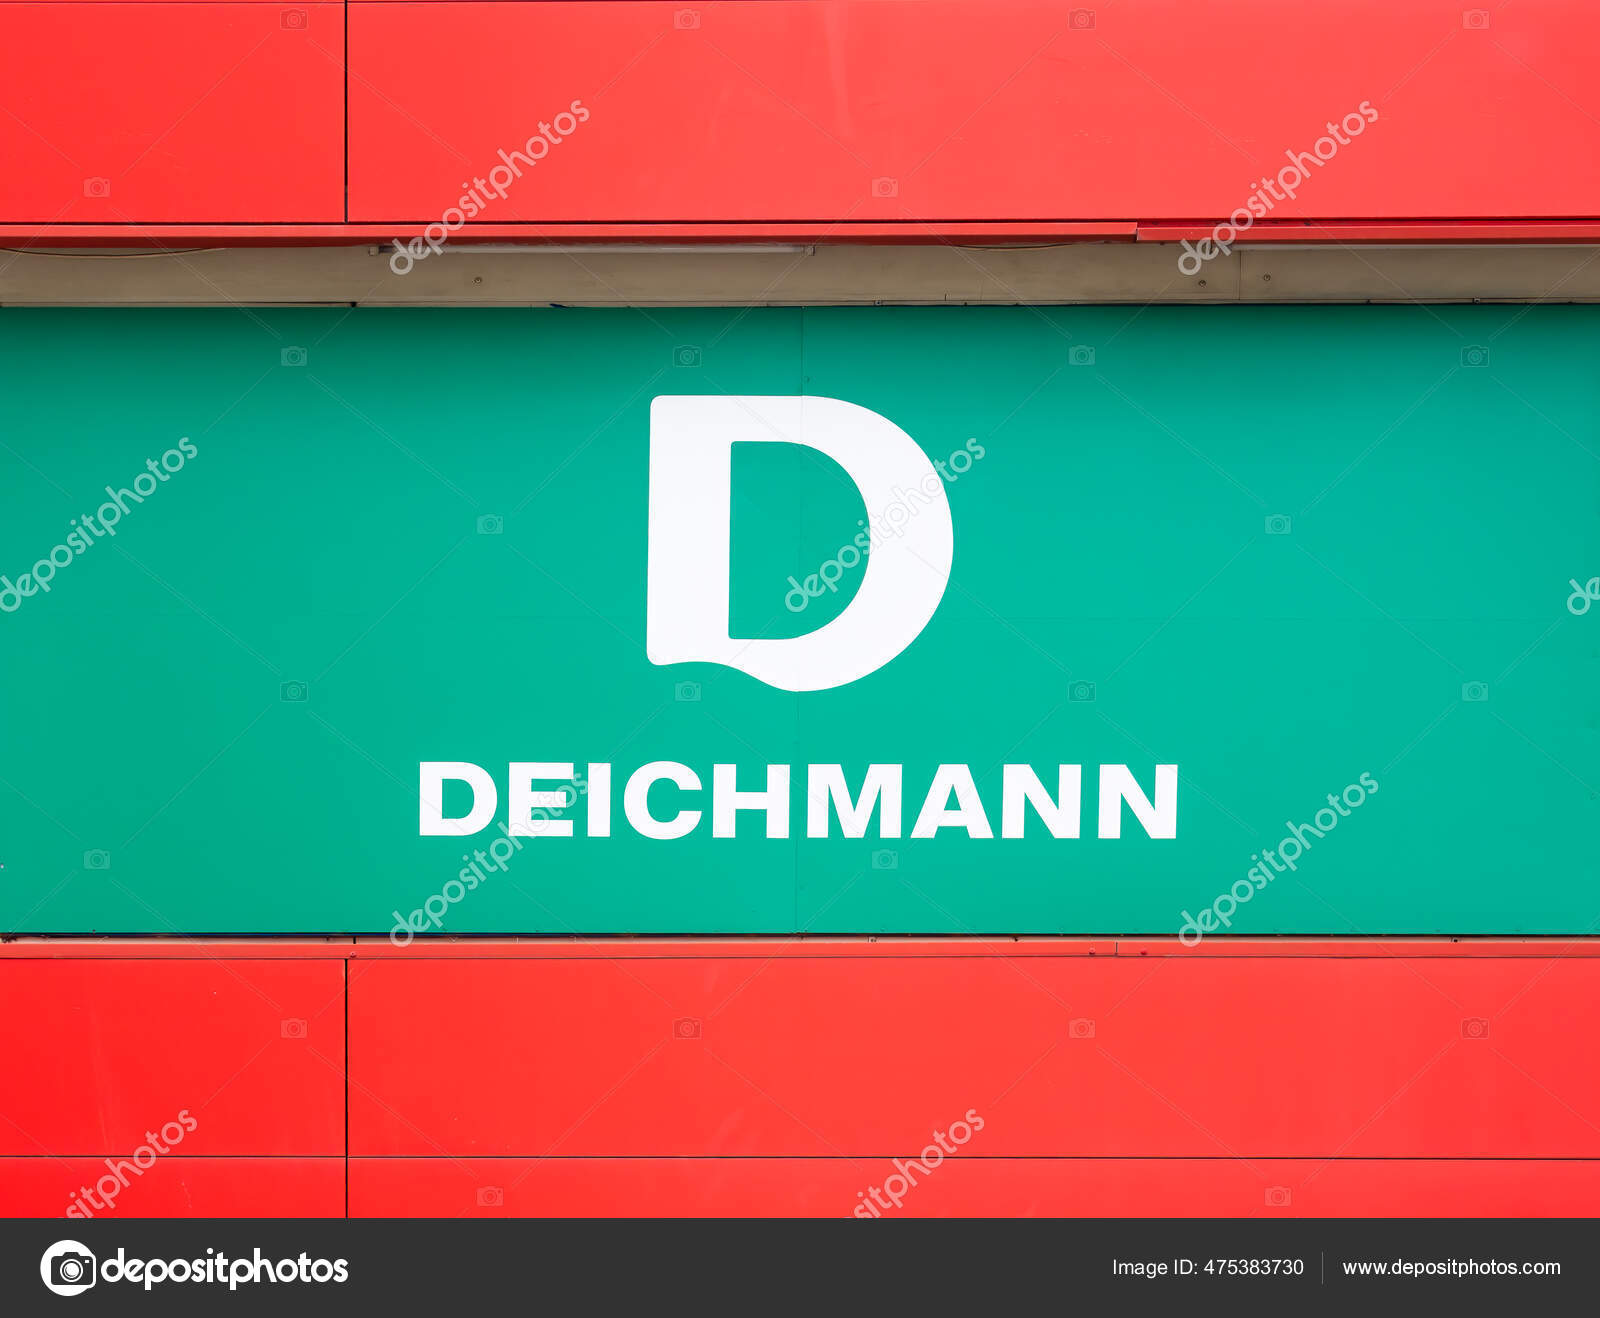 Intrusion Svin Krigsfanger Deichmann Pictures, Deichmann Stock Photos & Images | Depositphotos®